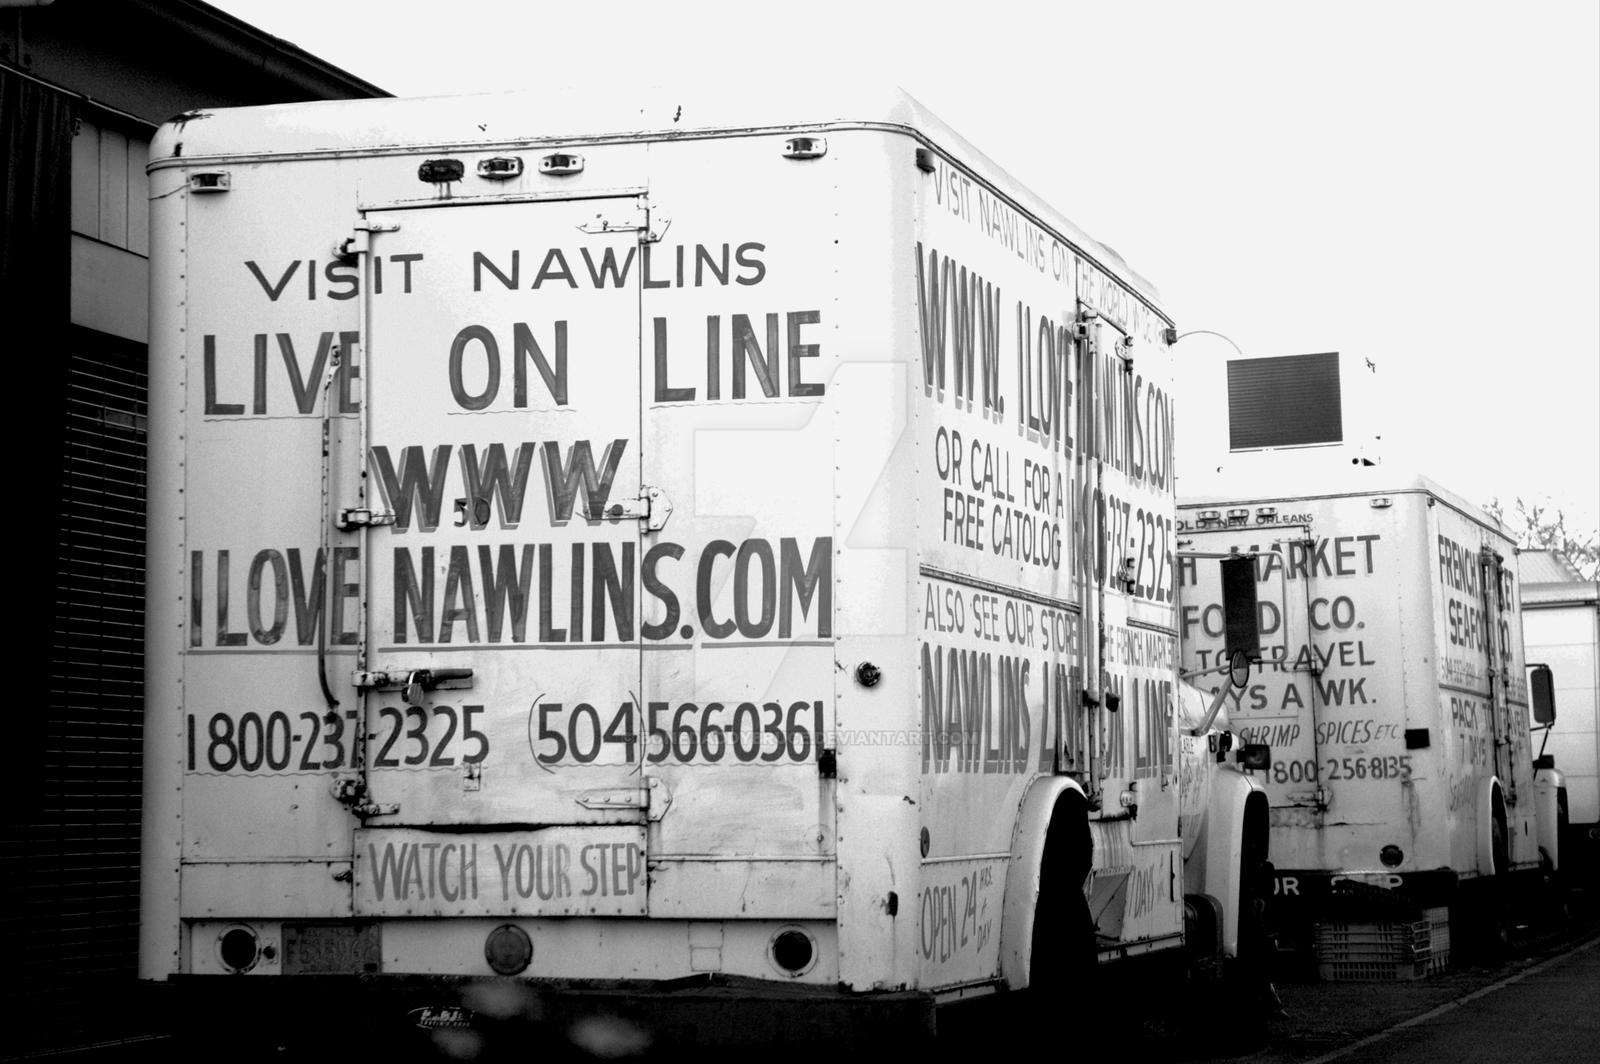 I Love Nawlins